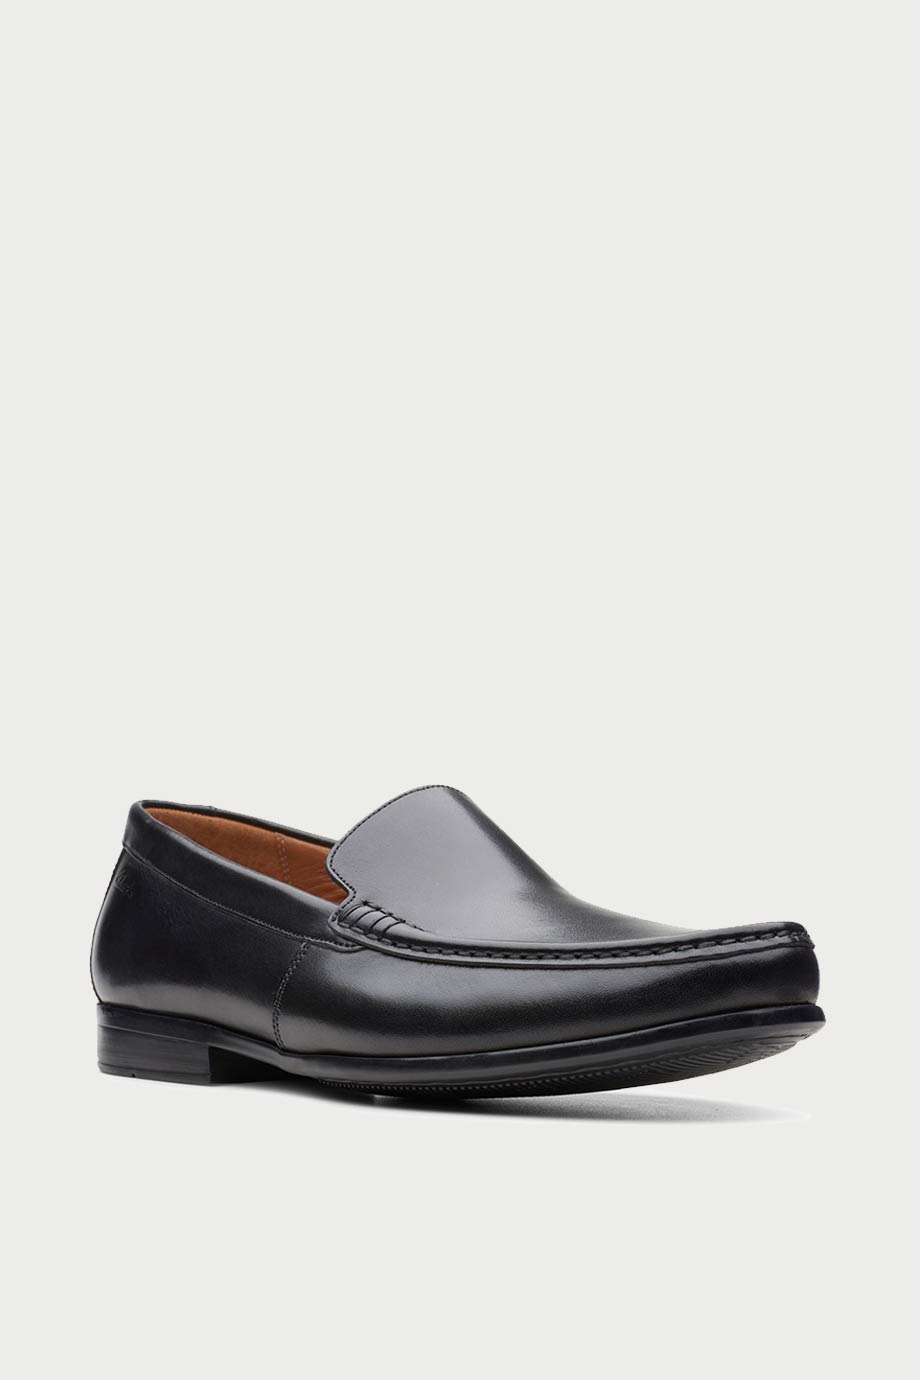 spiridoula metheniti shoes xalkida p claude plain black leather clarks 2